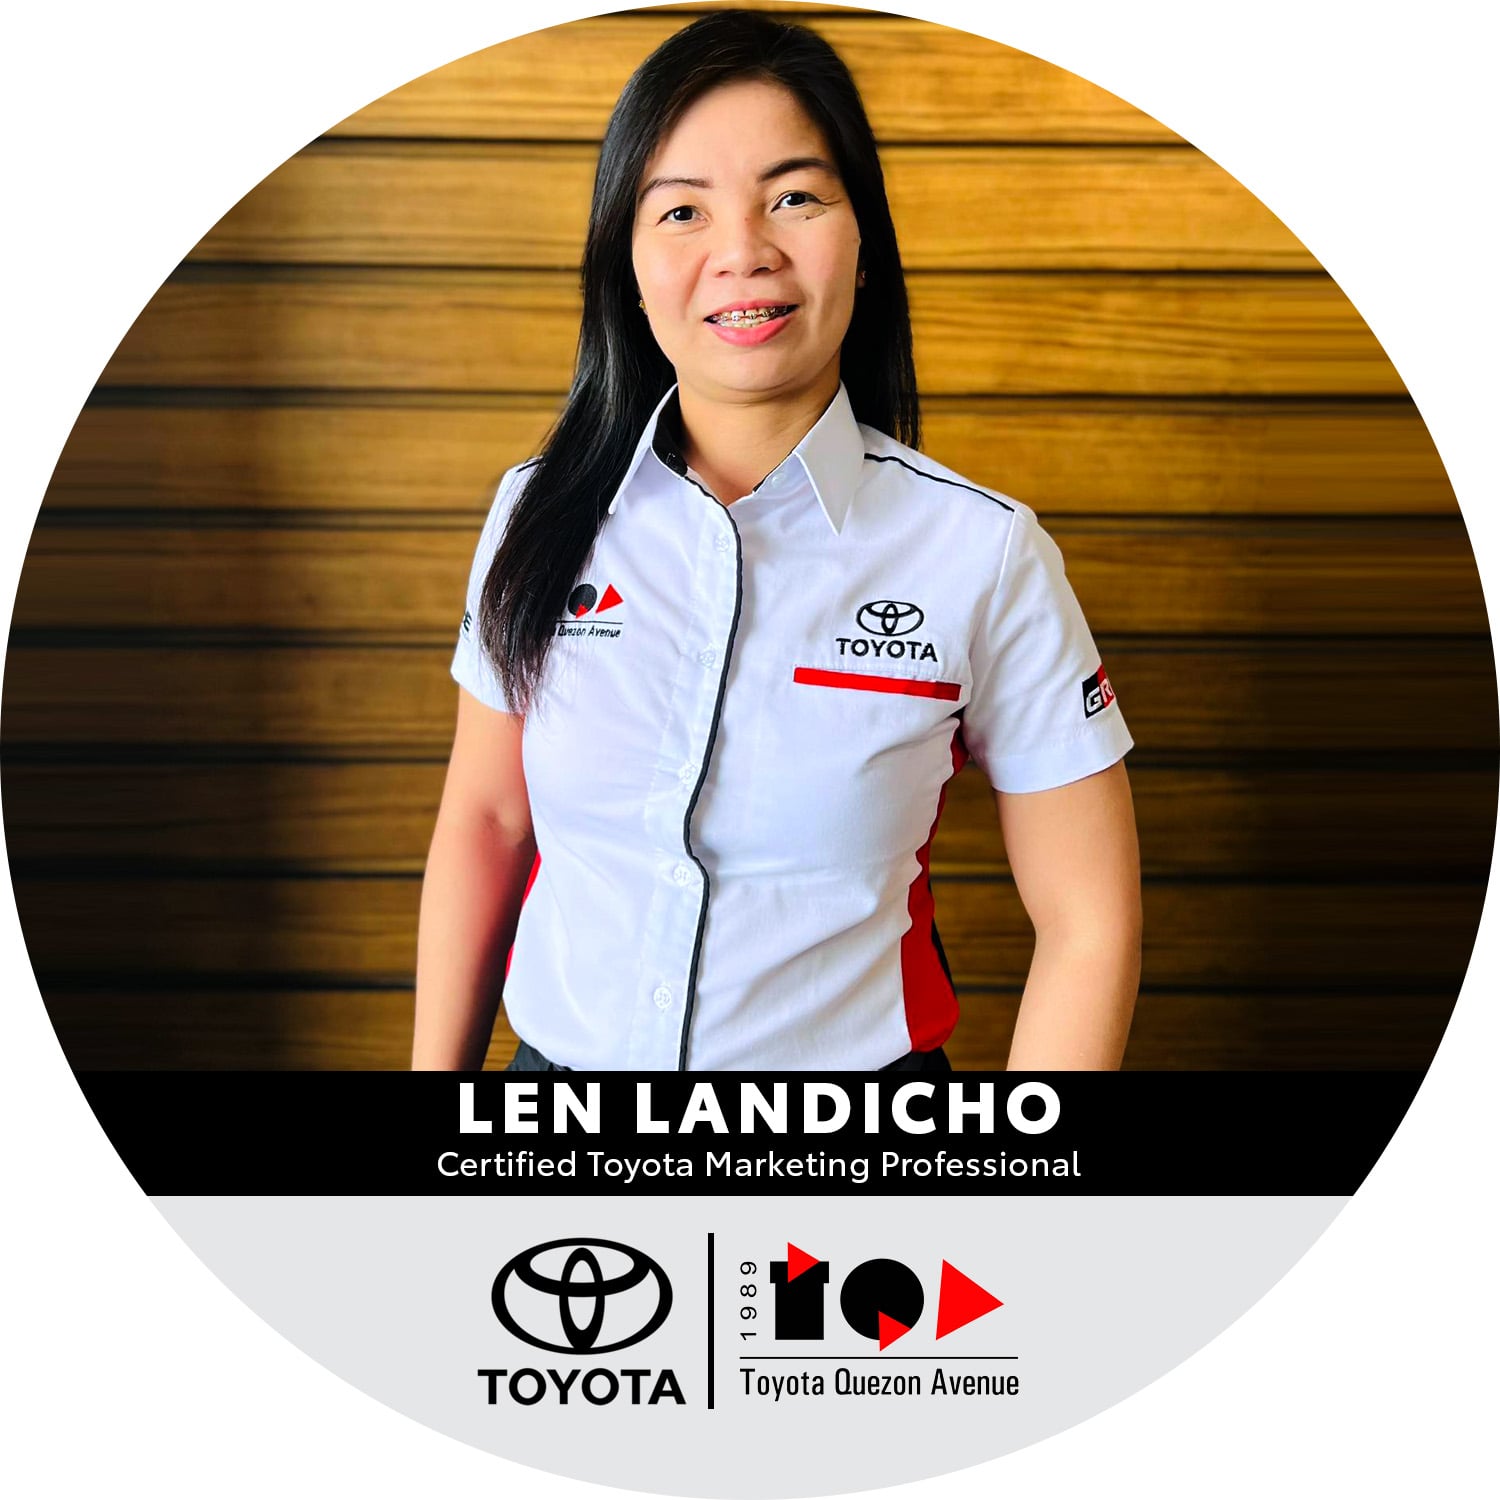 Certified Toyota Marketing Professionals - Len Landicho